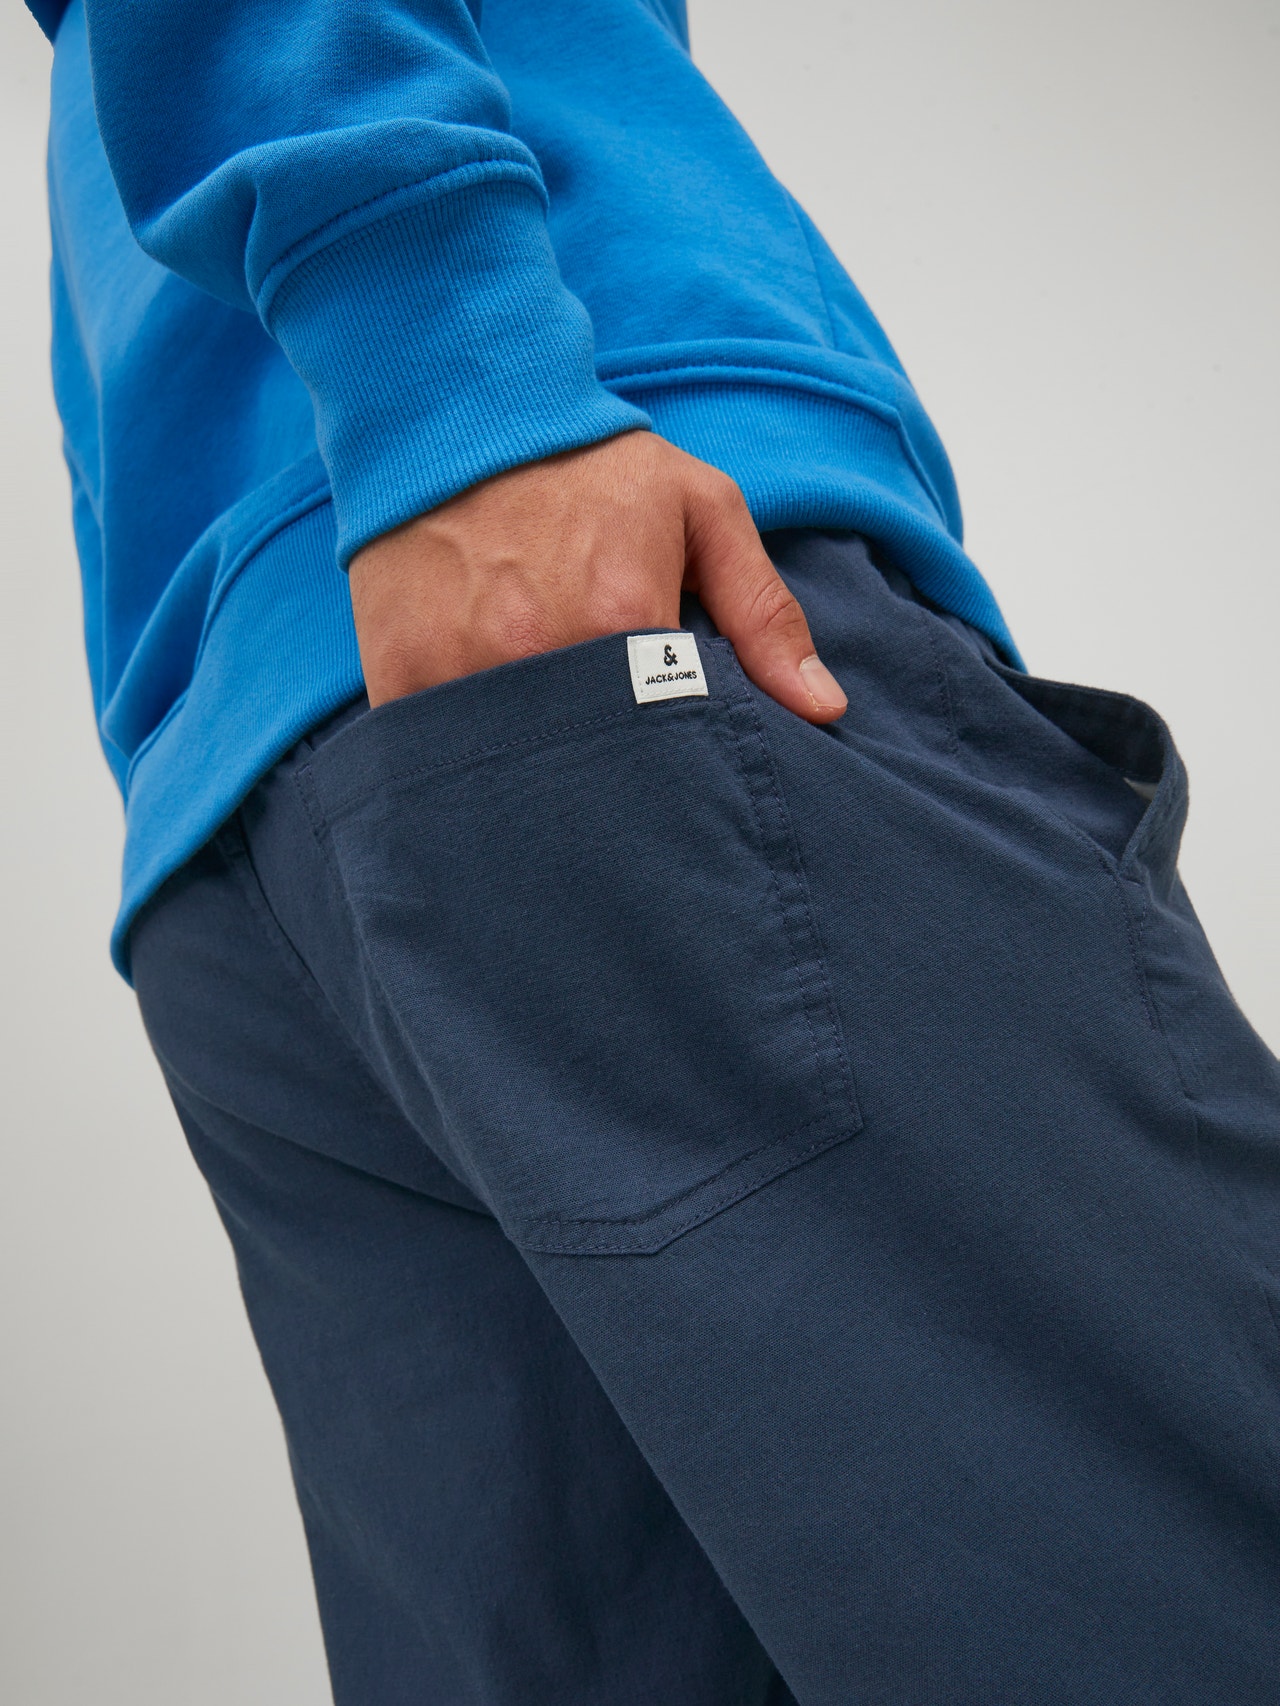 Jack & Jones Tapered Fit Klasyczne spodnie -Navy Blazer - 12229699